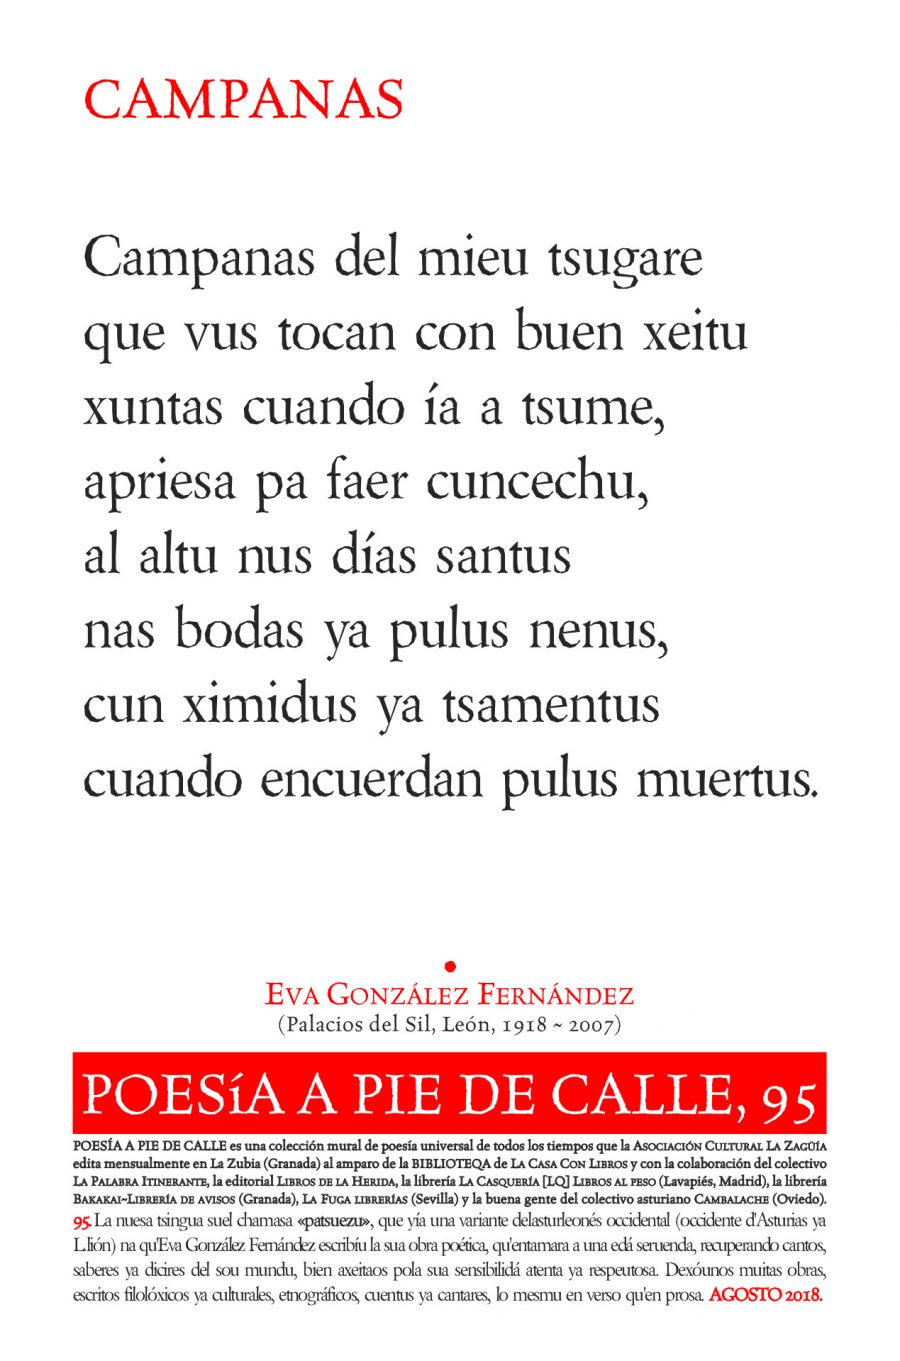 POESÍA A PIE DE CALLE, 95: CAMPANAS, DE EVA GONZÁLEZ FERNÁNDEZ